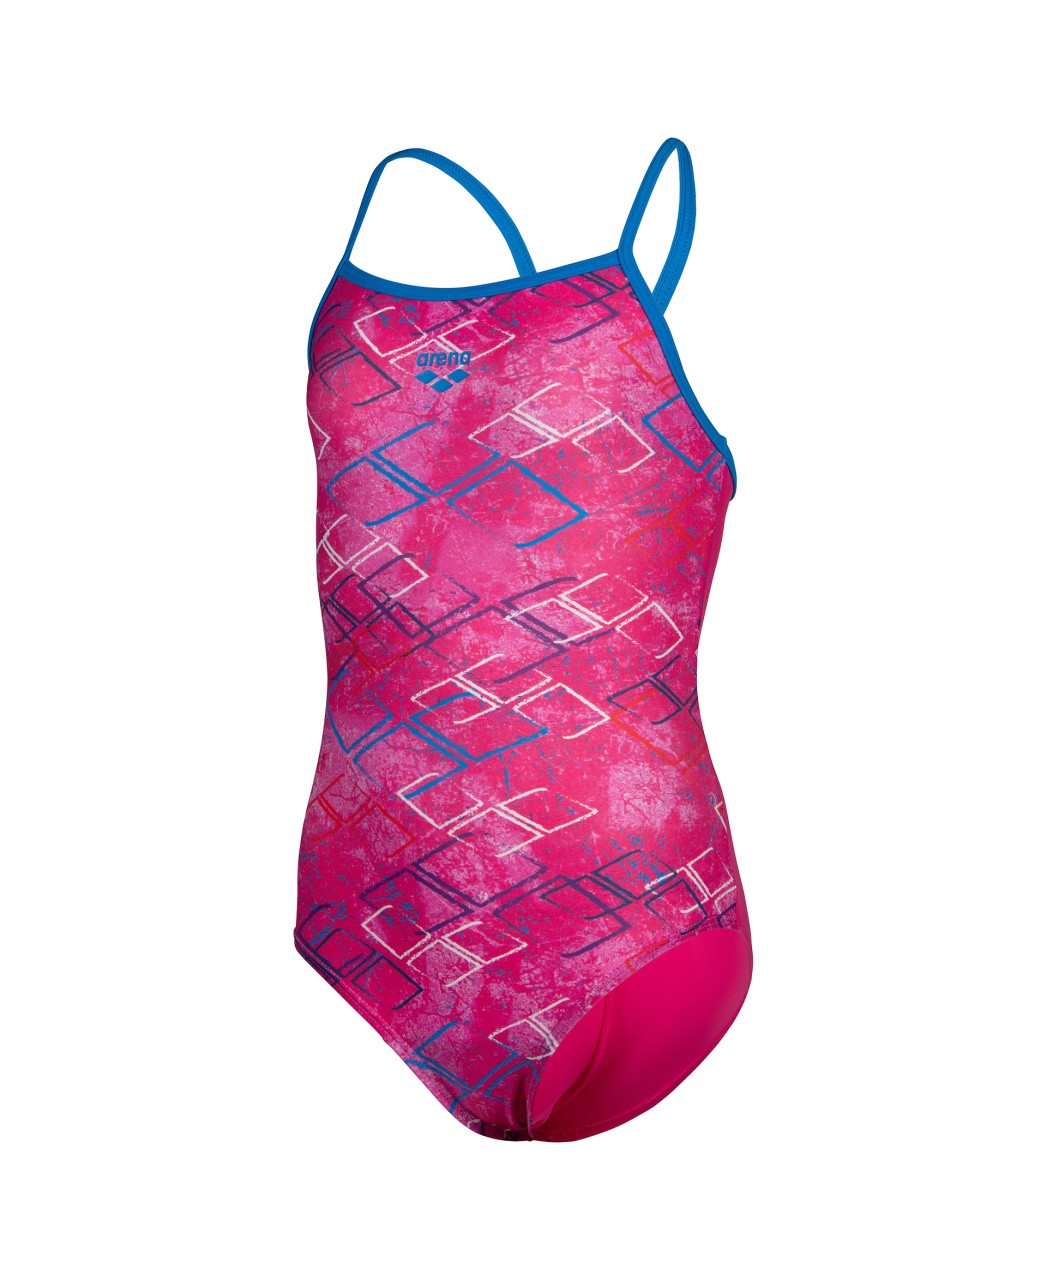 G Daly Swimsuit Light Drop Back freak rose-blue